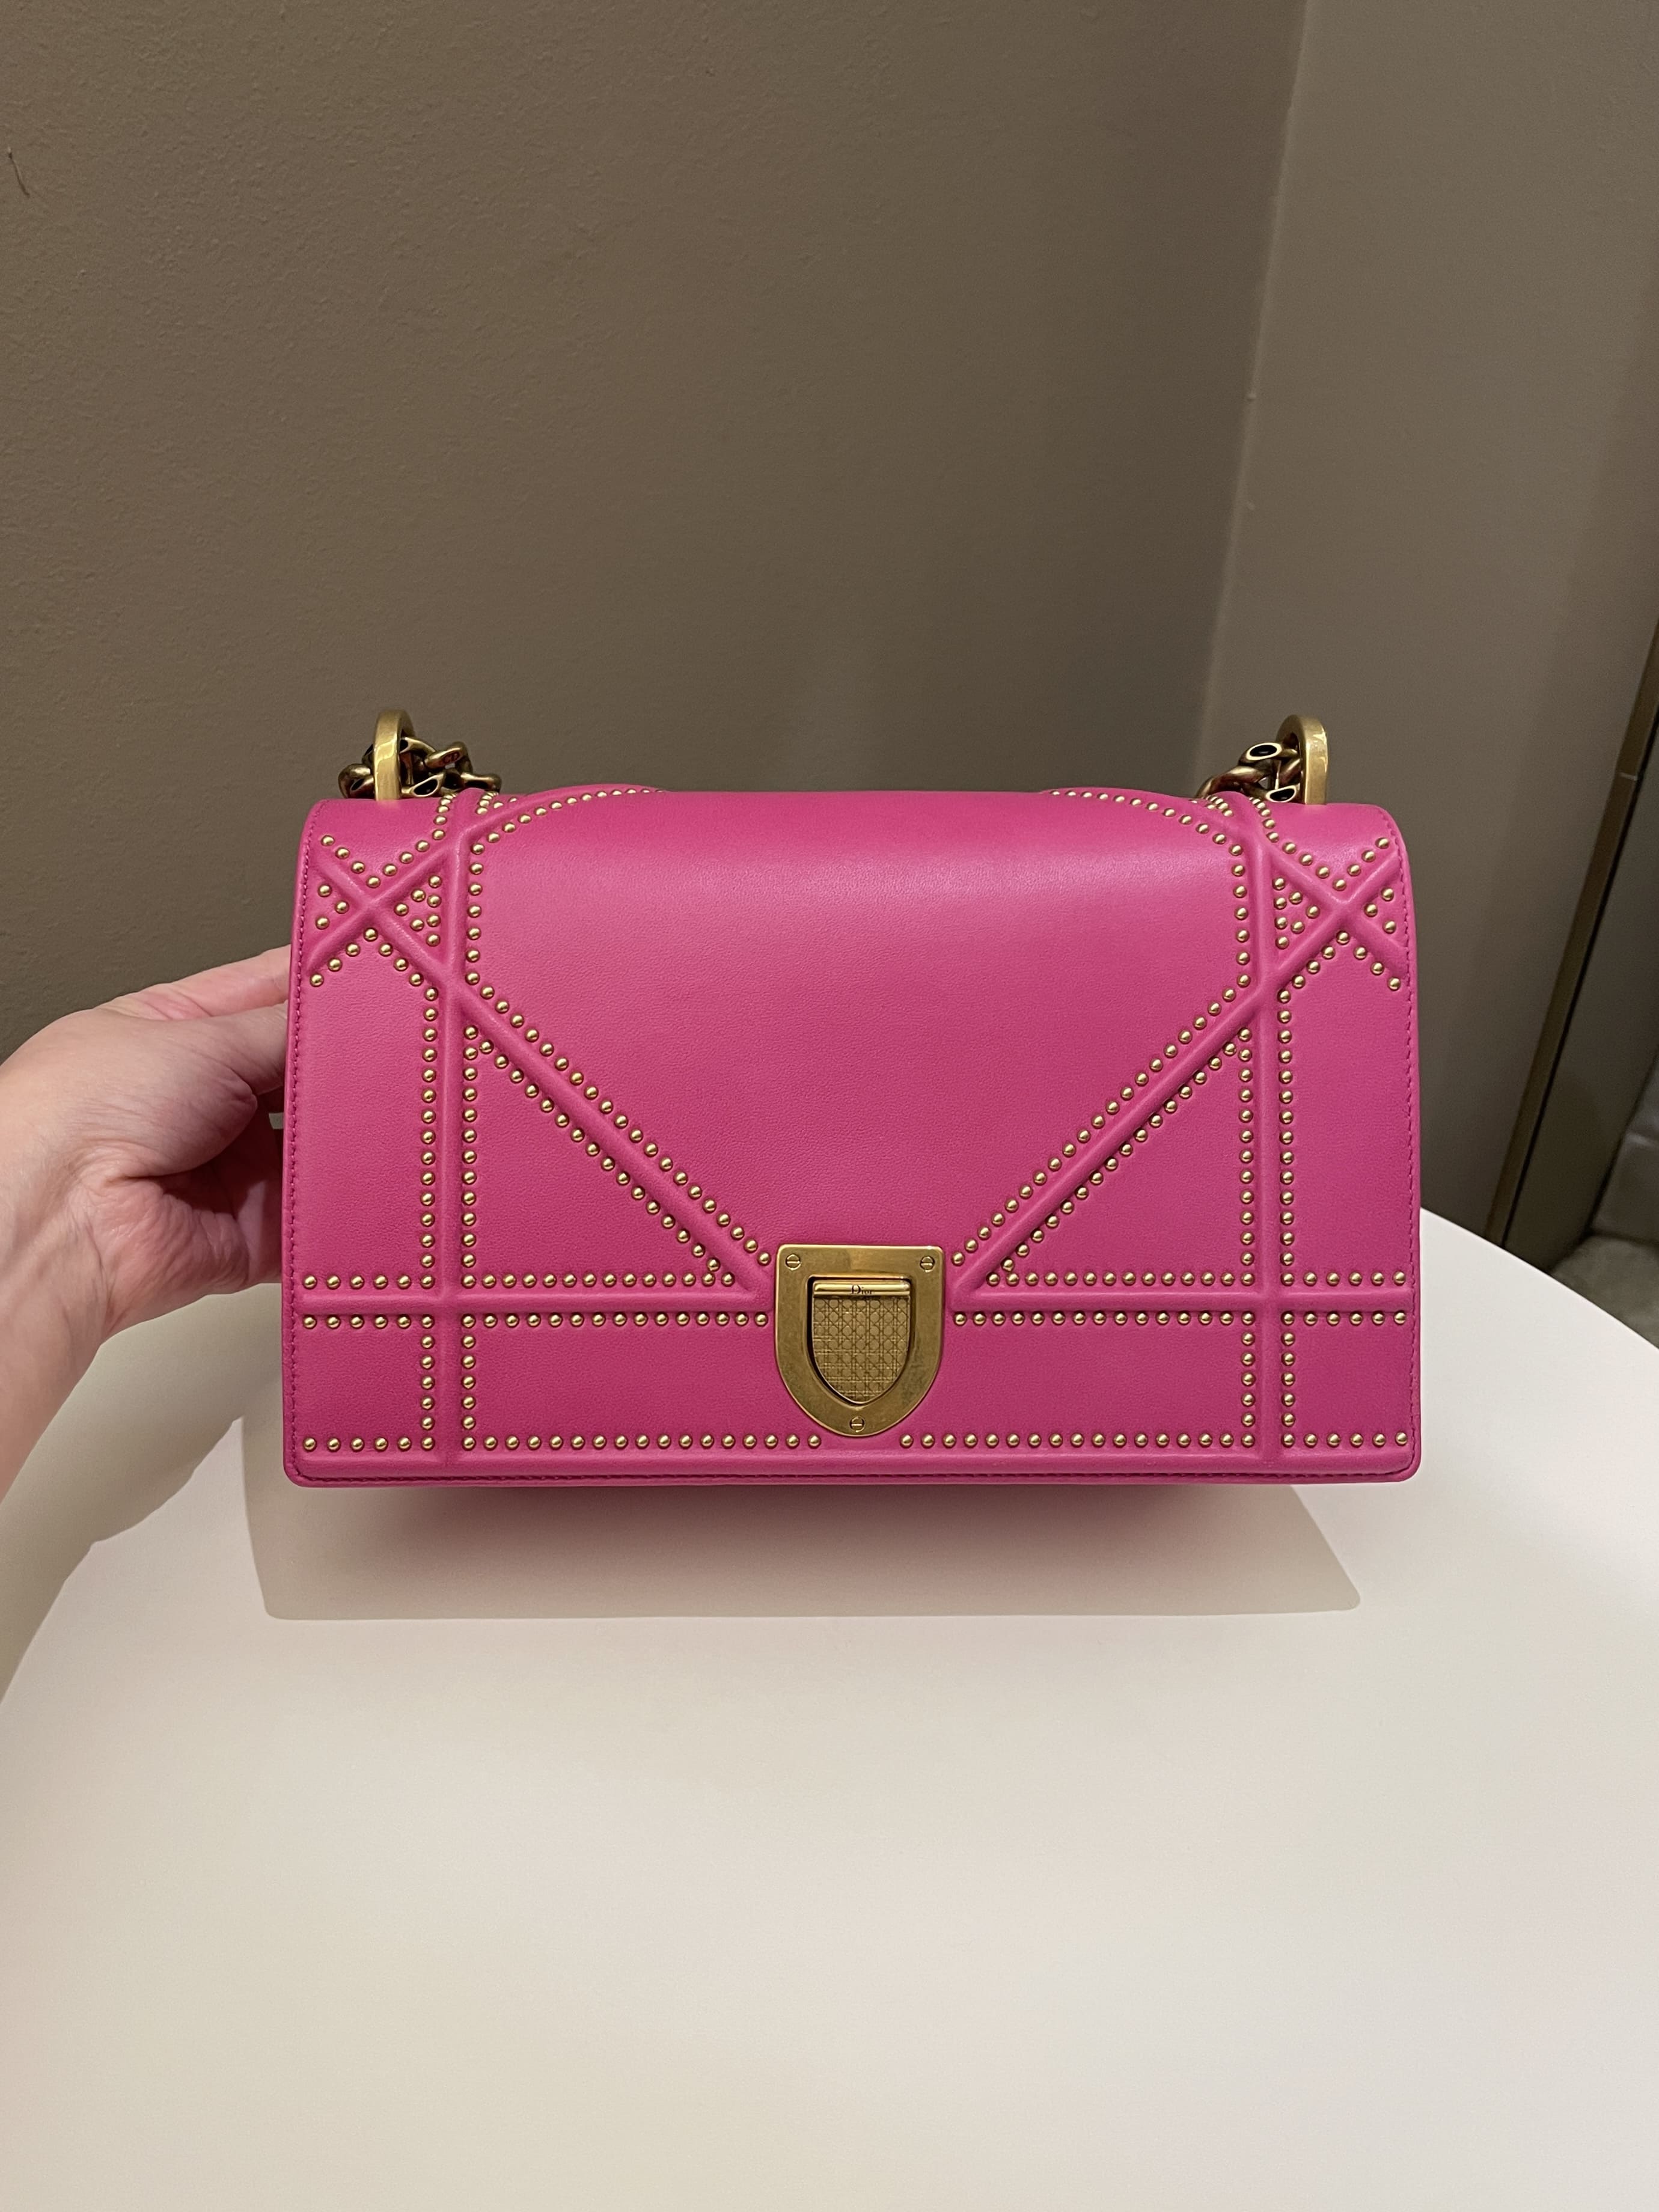 Christian Dior Pink Leather Small Diorama Flap Bag